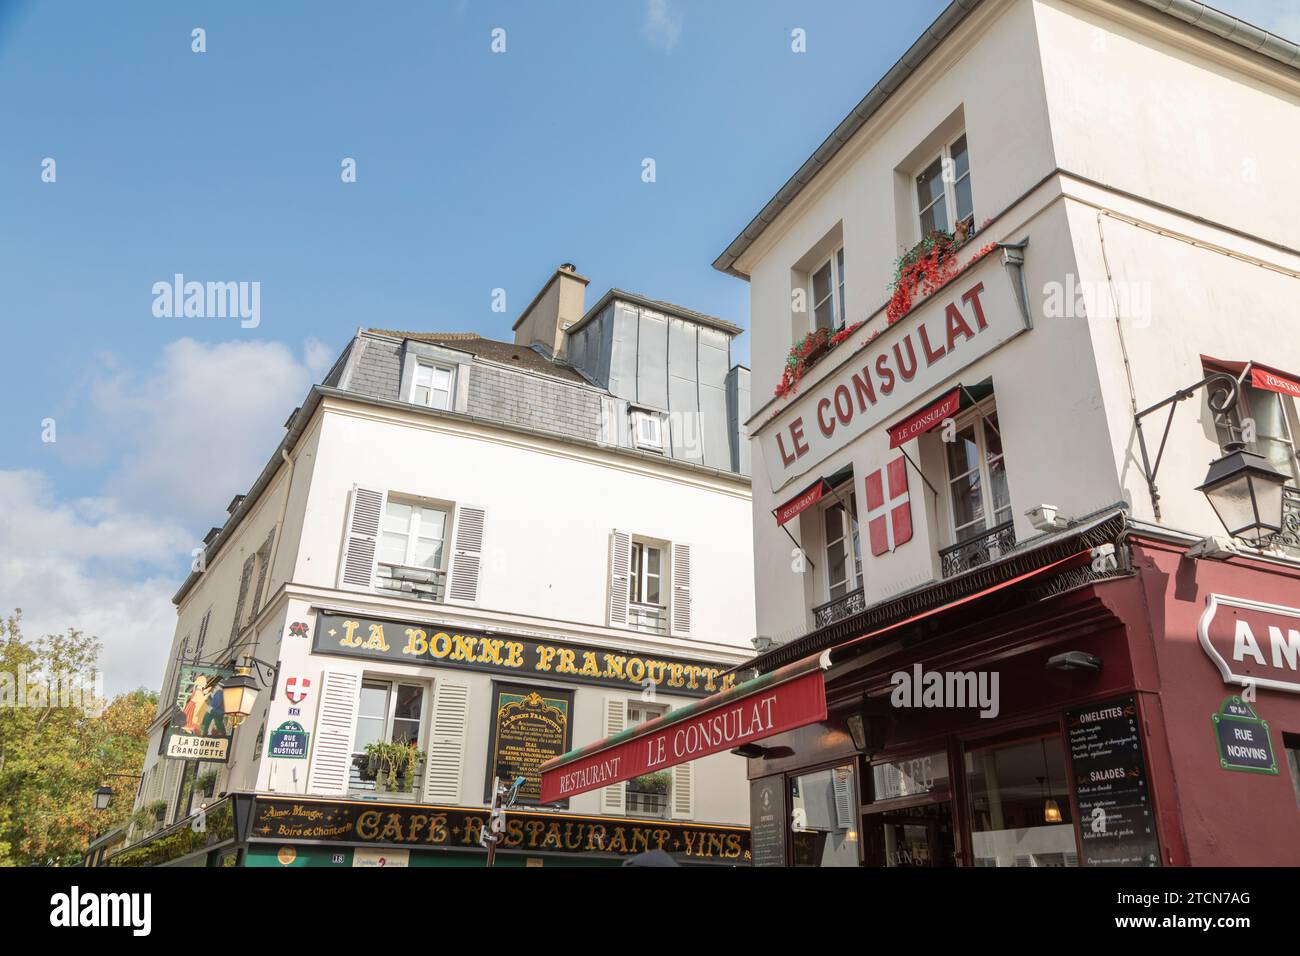 Charming restaurant Le Consulat on the Montmartre hill, Paris, France Stock Photo